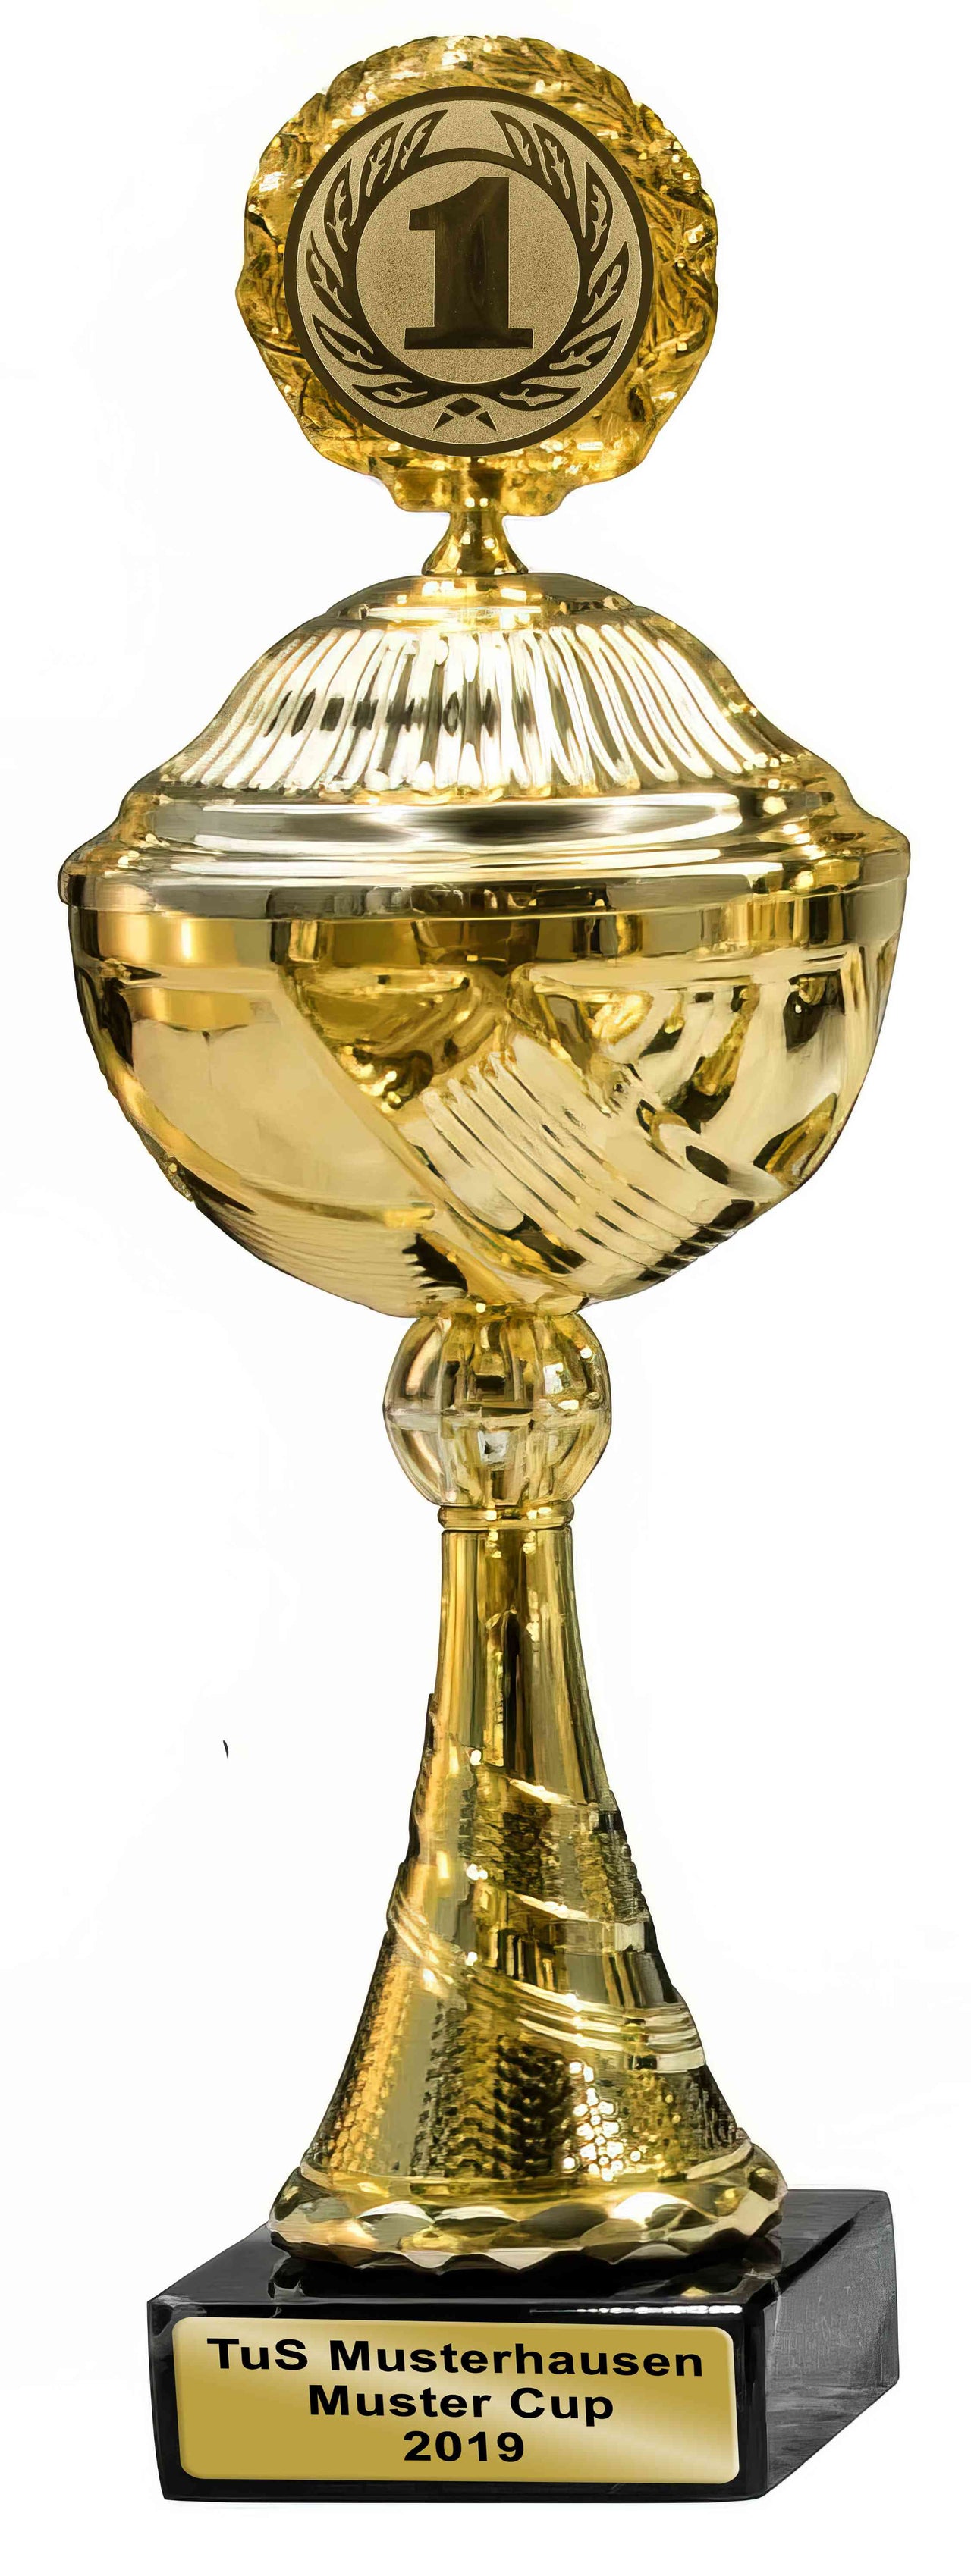 Goldener Pokal Münster 14-er Pokalserie mit Deckel 253 mm - 430 mm PK759340-14-E50 oben auf einem schwarzen Sockel, beschriftet mit "Tus Musterhausen Muster Cup 2019".